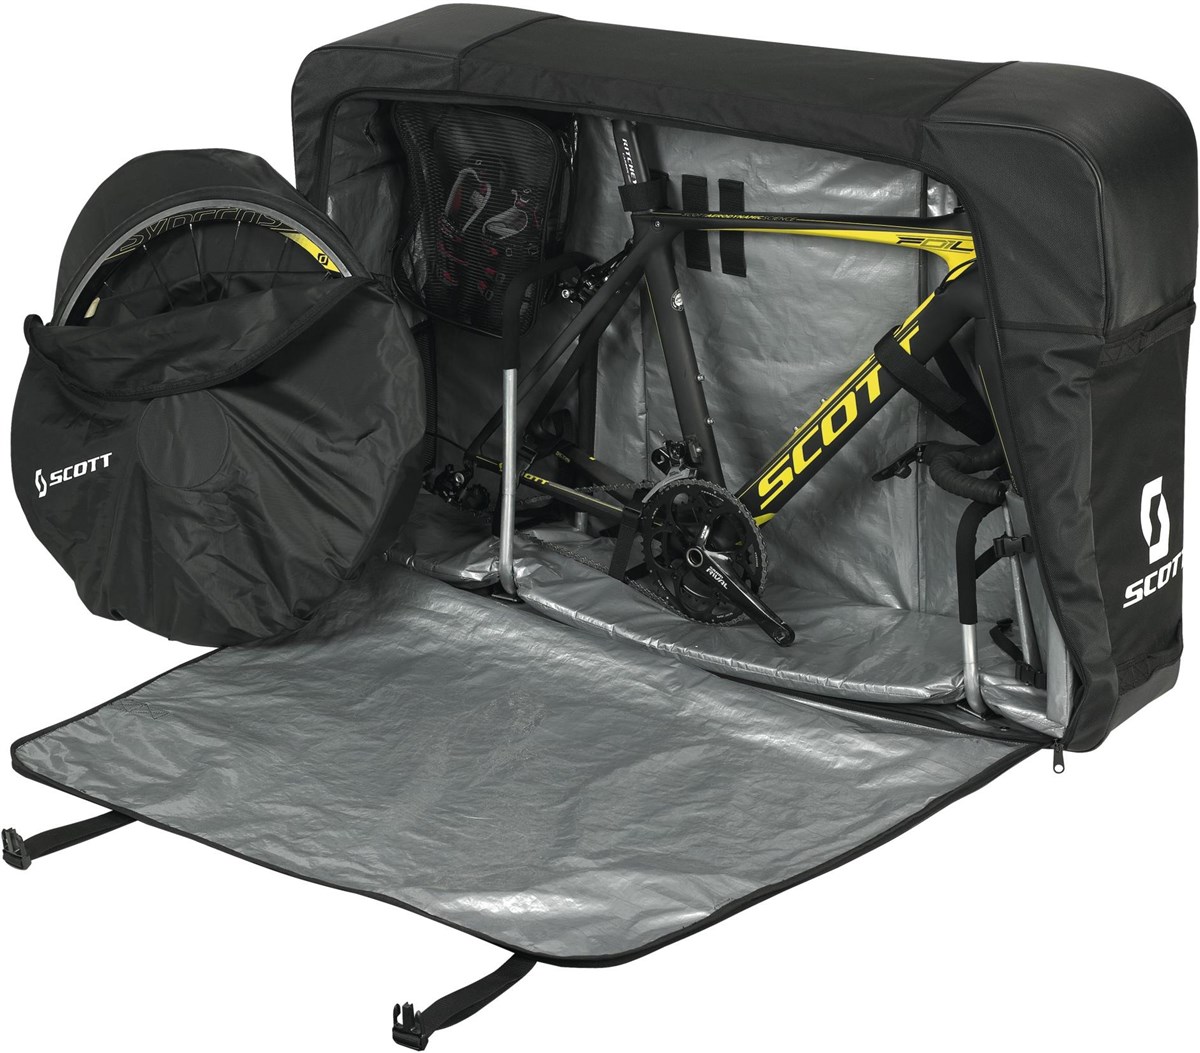 Scott Premium Bike Transport Bag product image